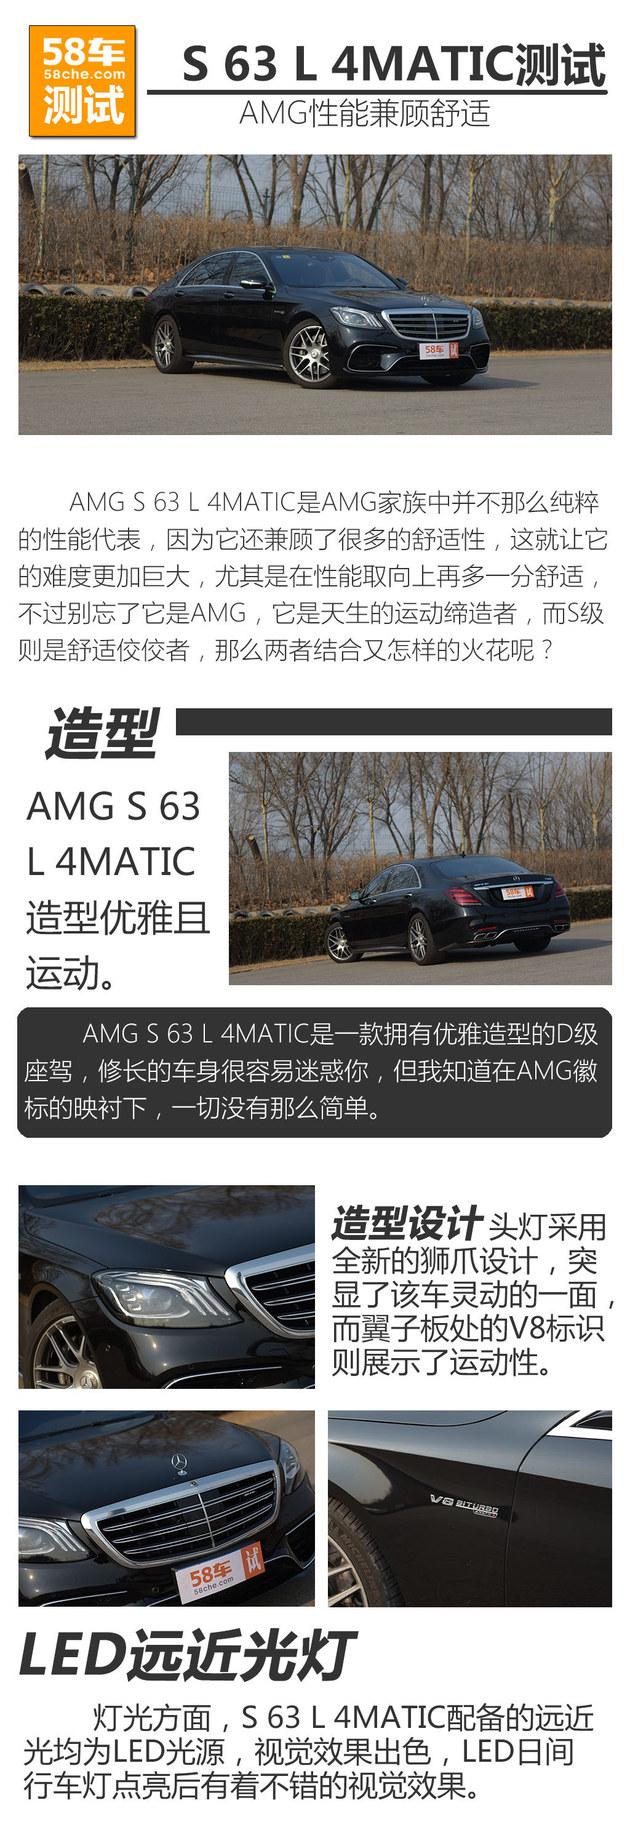 AMG S 63 L 4MATIC性能测试 性能优异